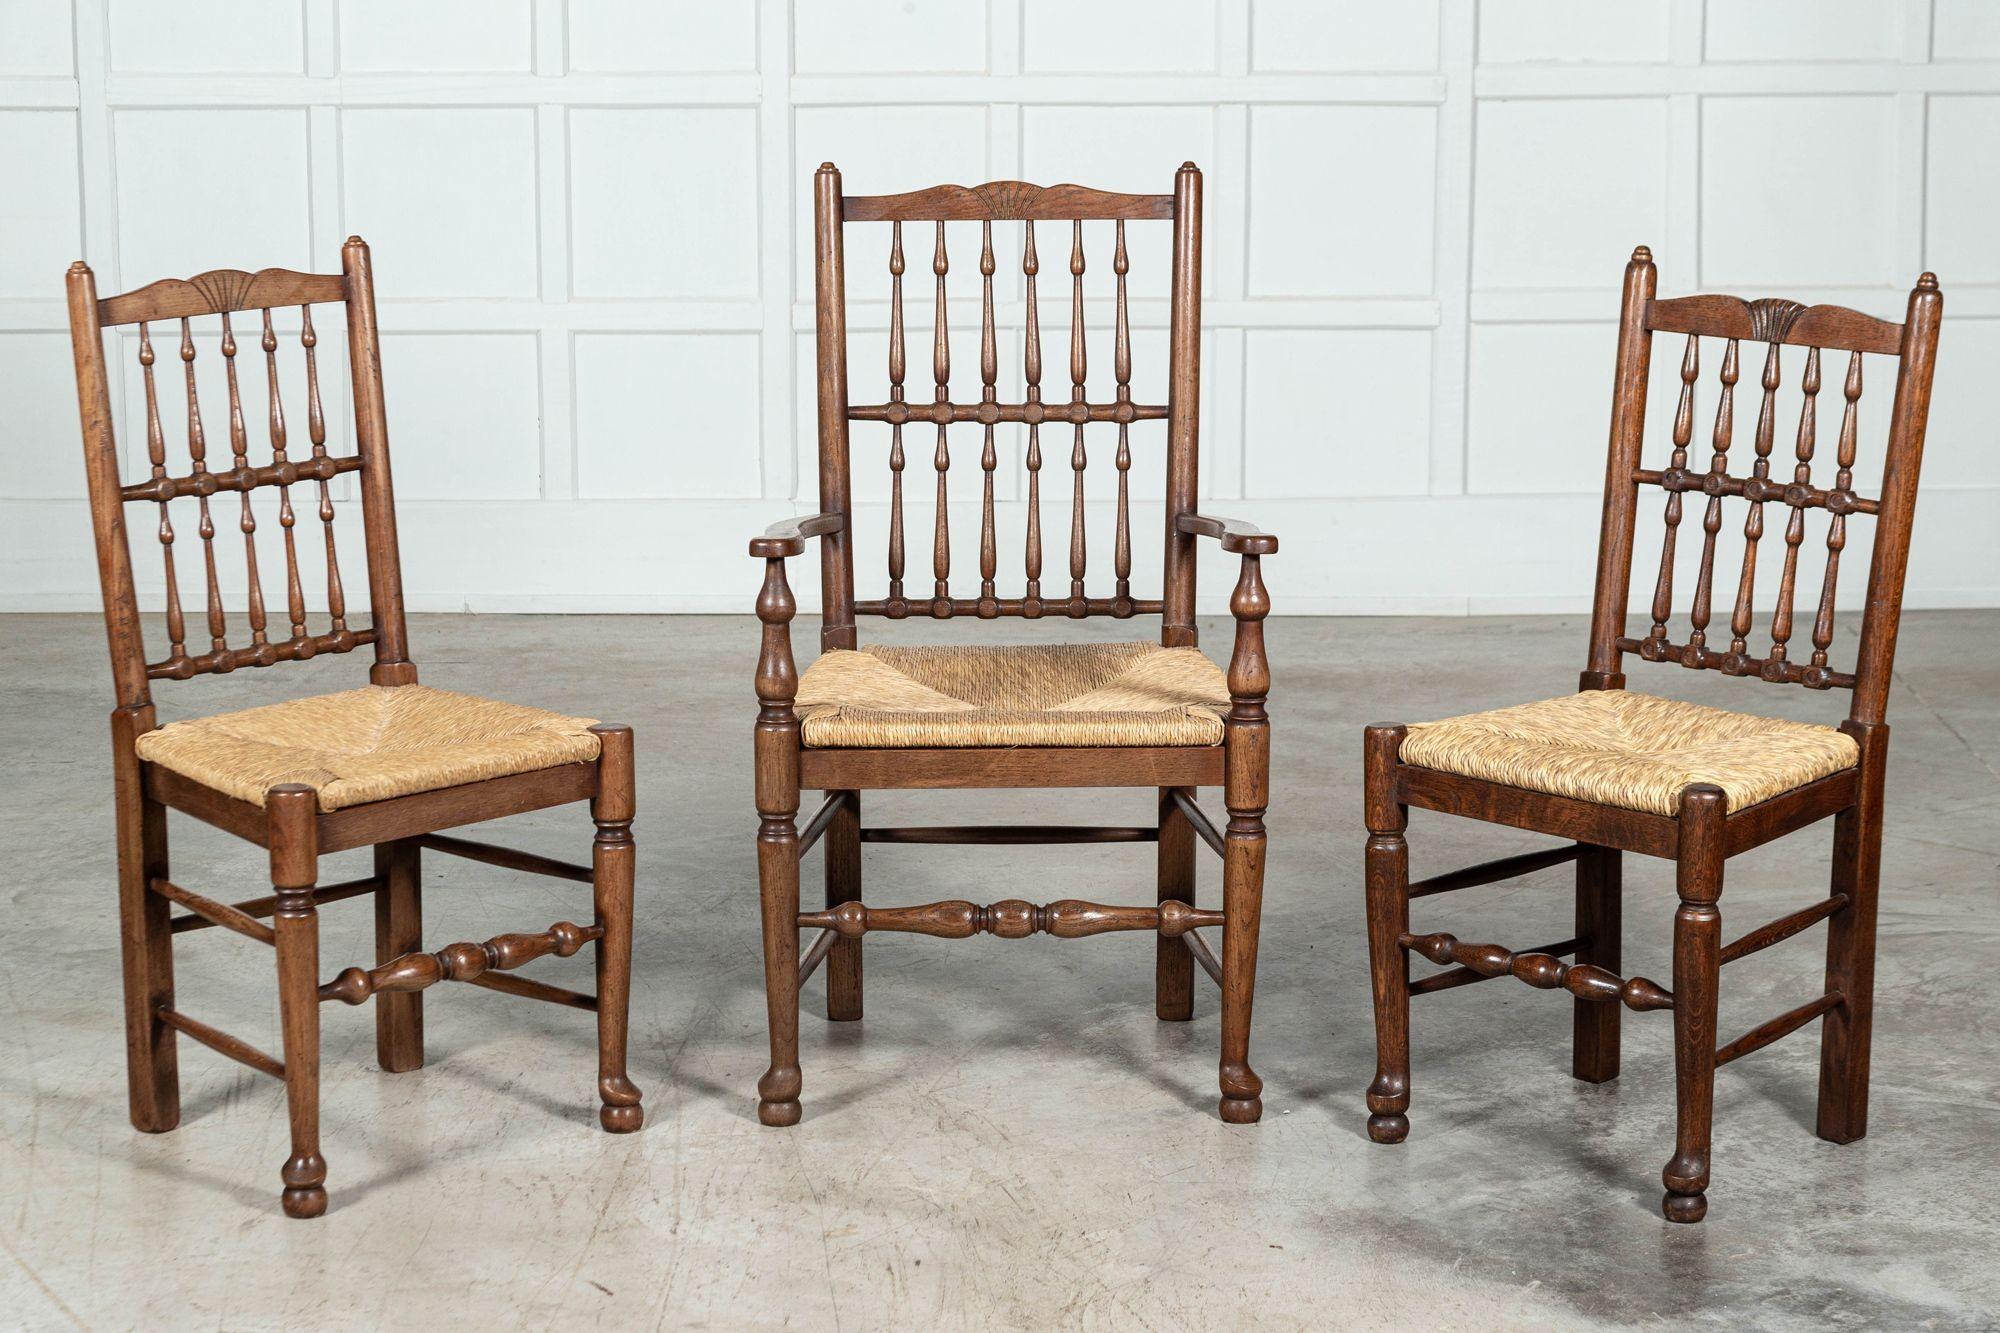 circa 1940
Set 10 English Bobbin Oak & Ash Rush Dining Chairs
Chairs x8
W41 x D40 x H100
Seat height 47 cm
Carvers x2
W59 x D50 x H107 cm
Seat height 48 cm.